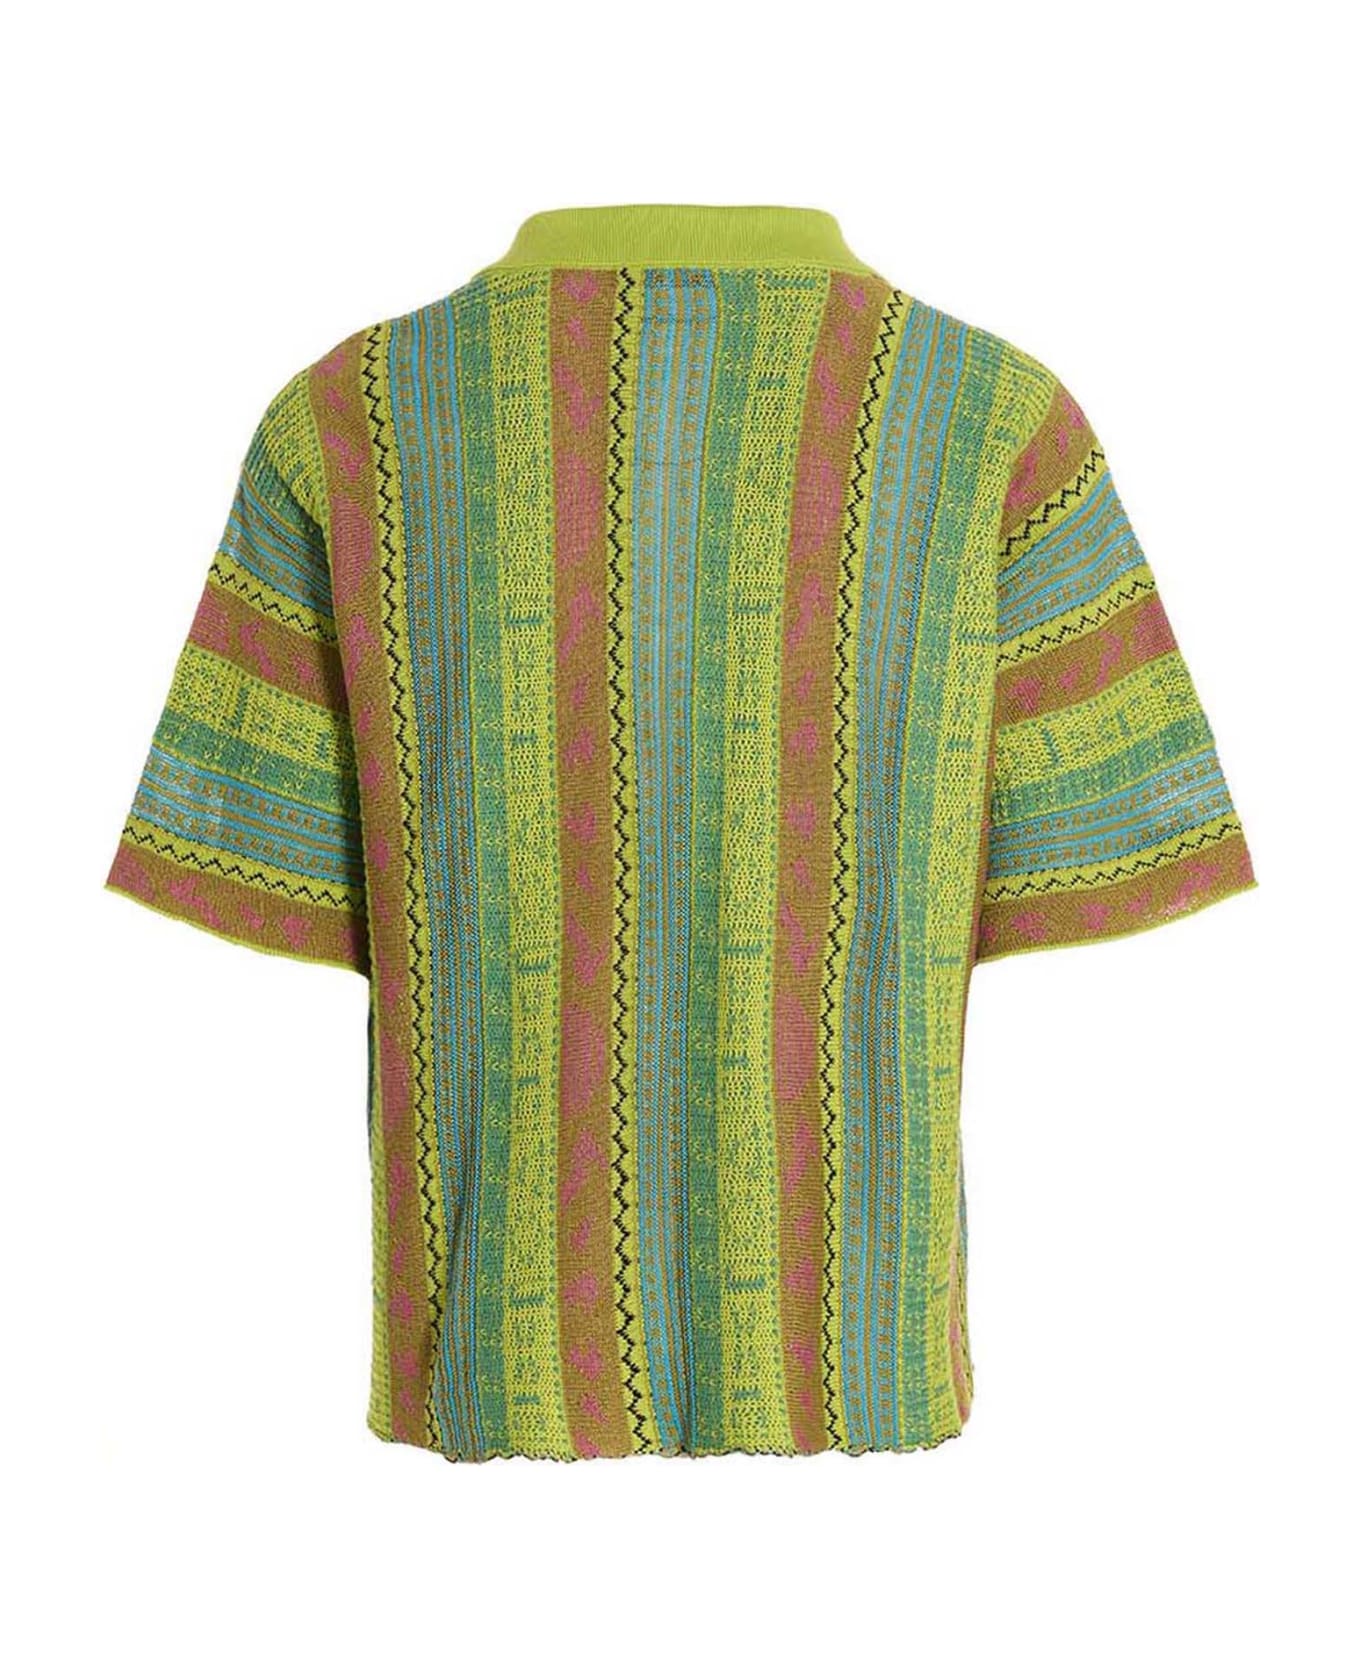 Avril8790 Jacquard Shirt - Multicolor シャツ